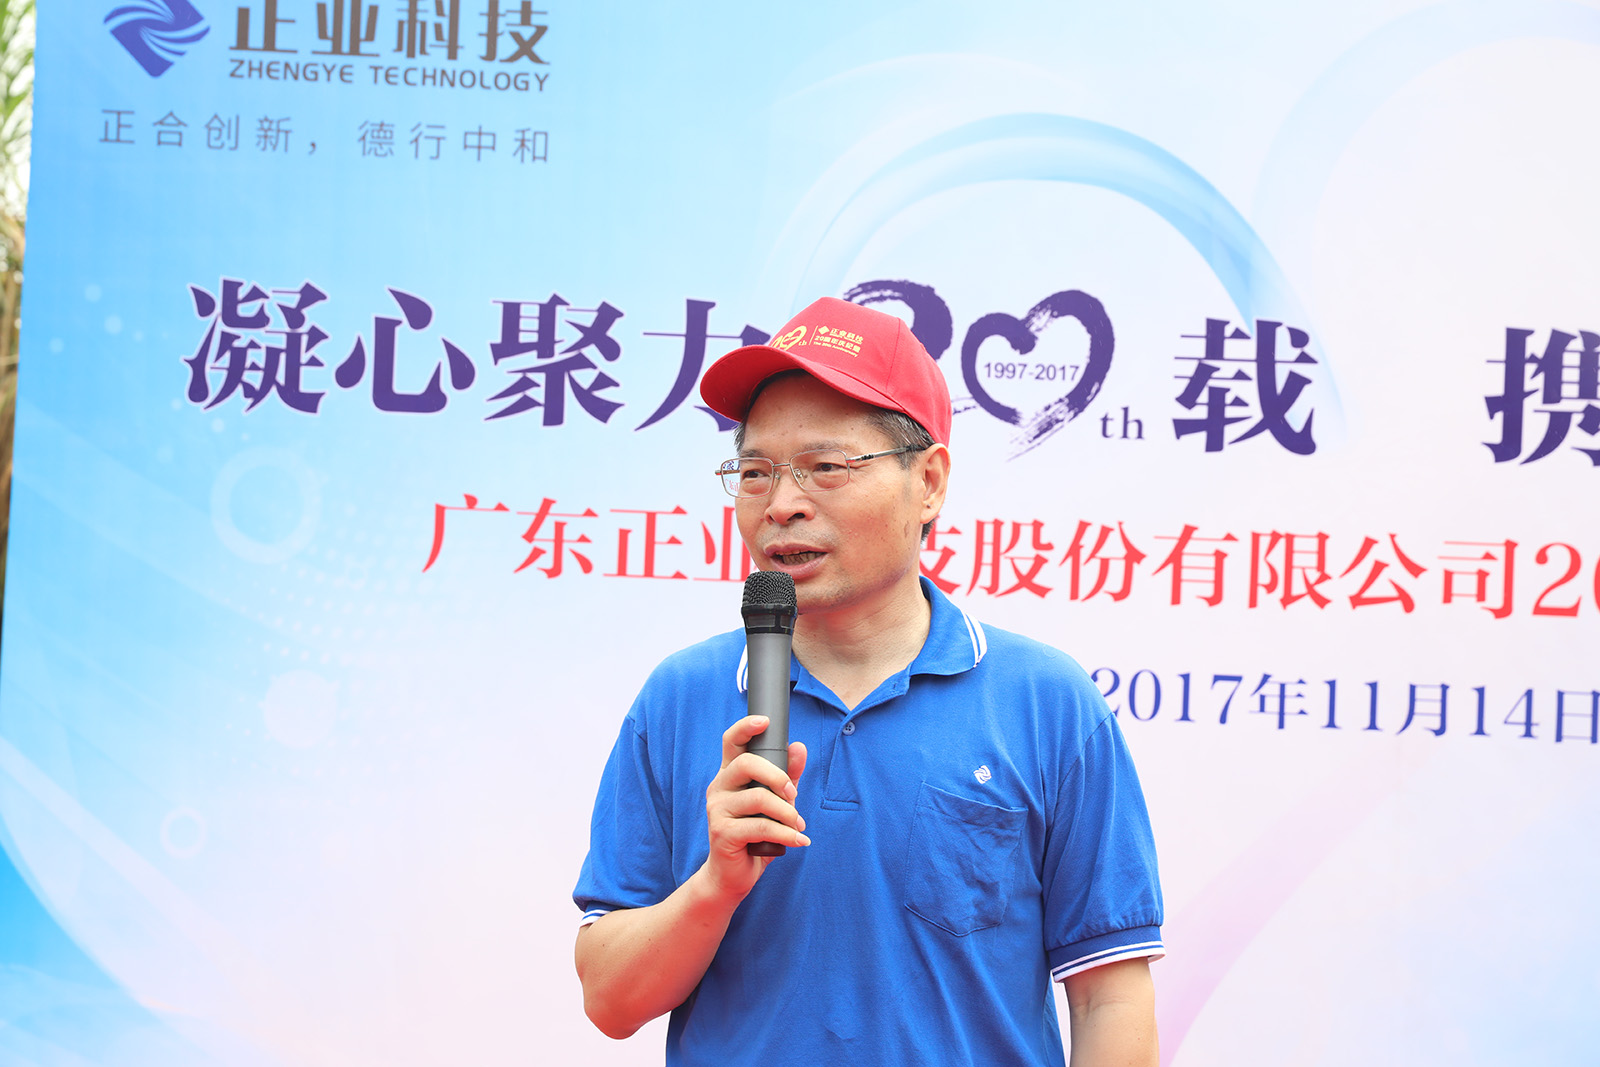 Chairman Xu Dihua gave a wonderful speech